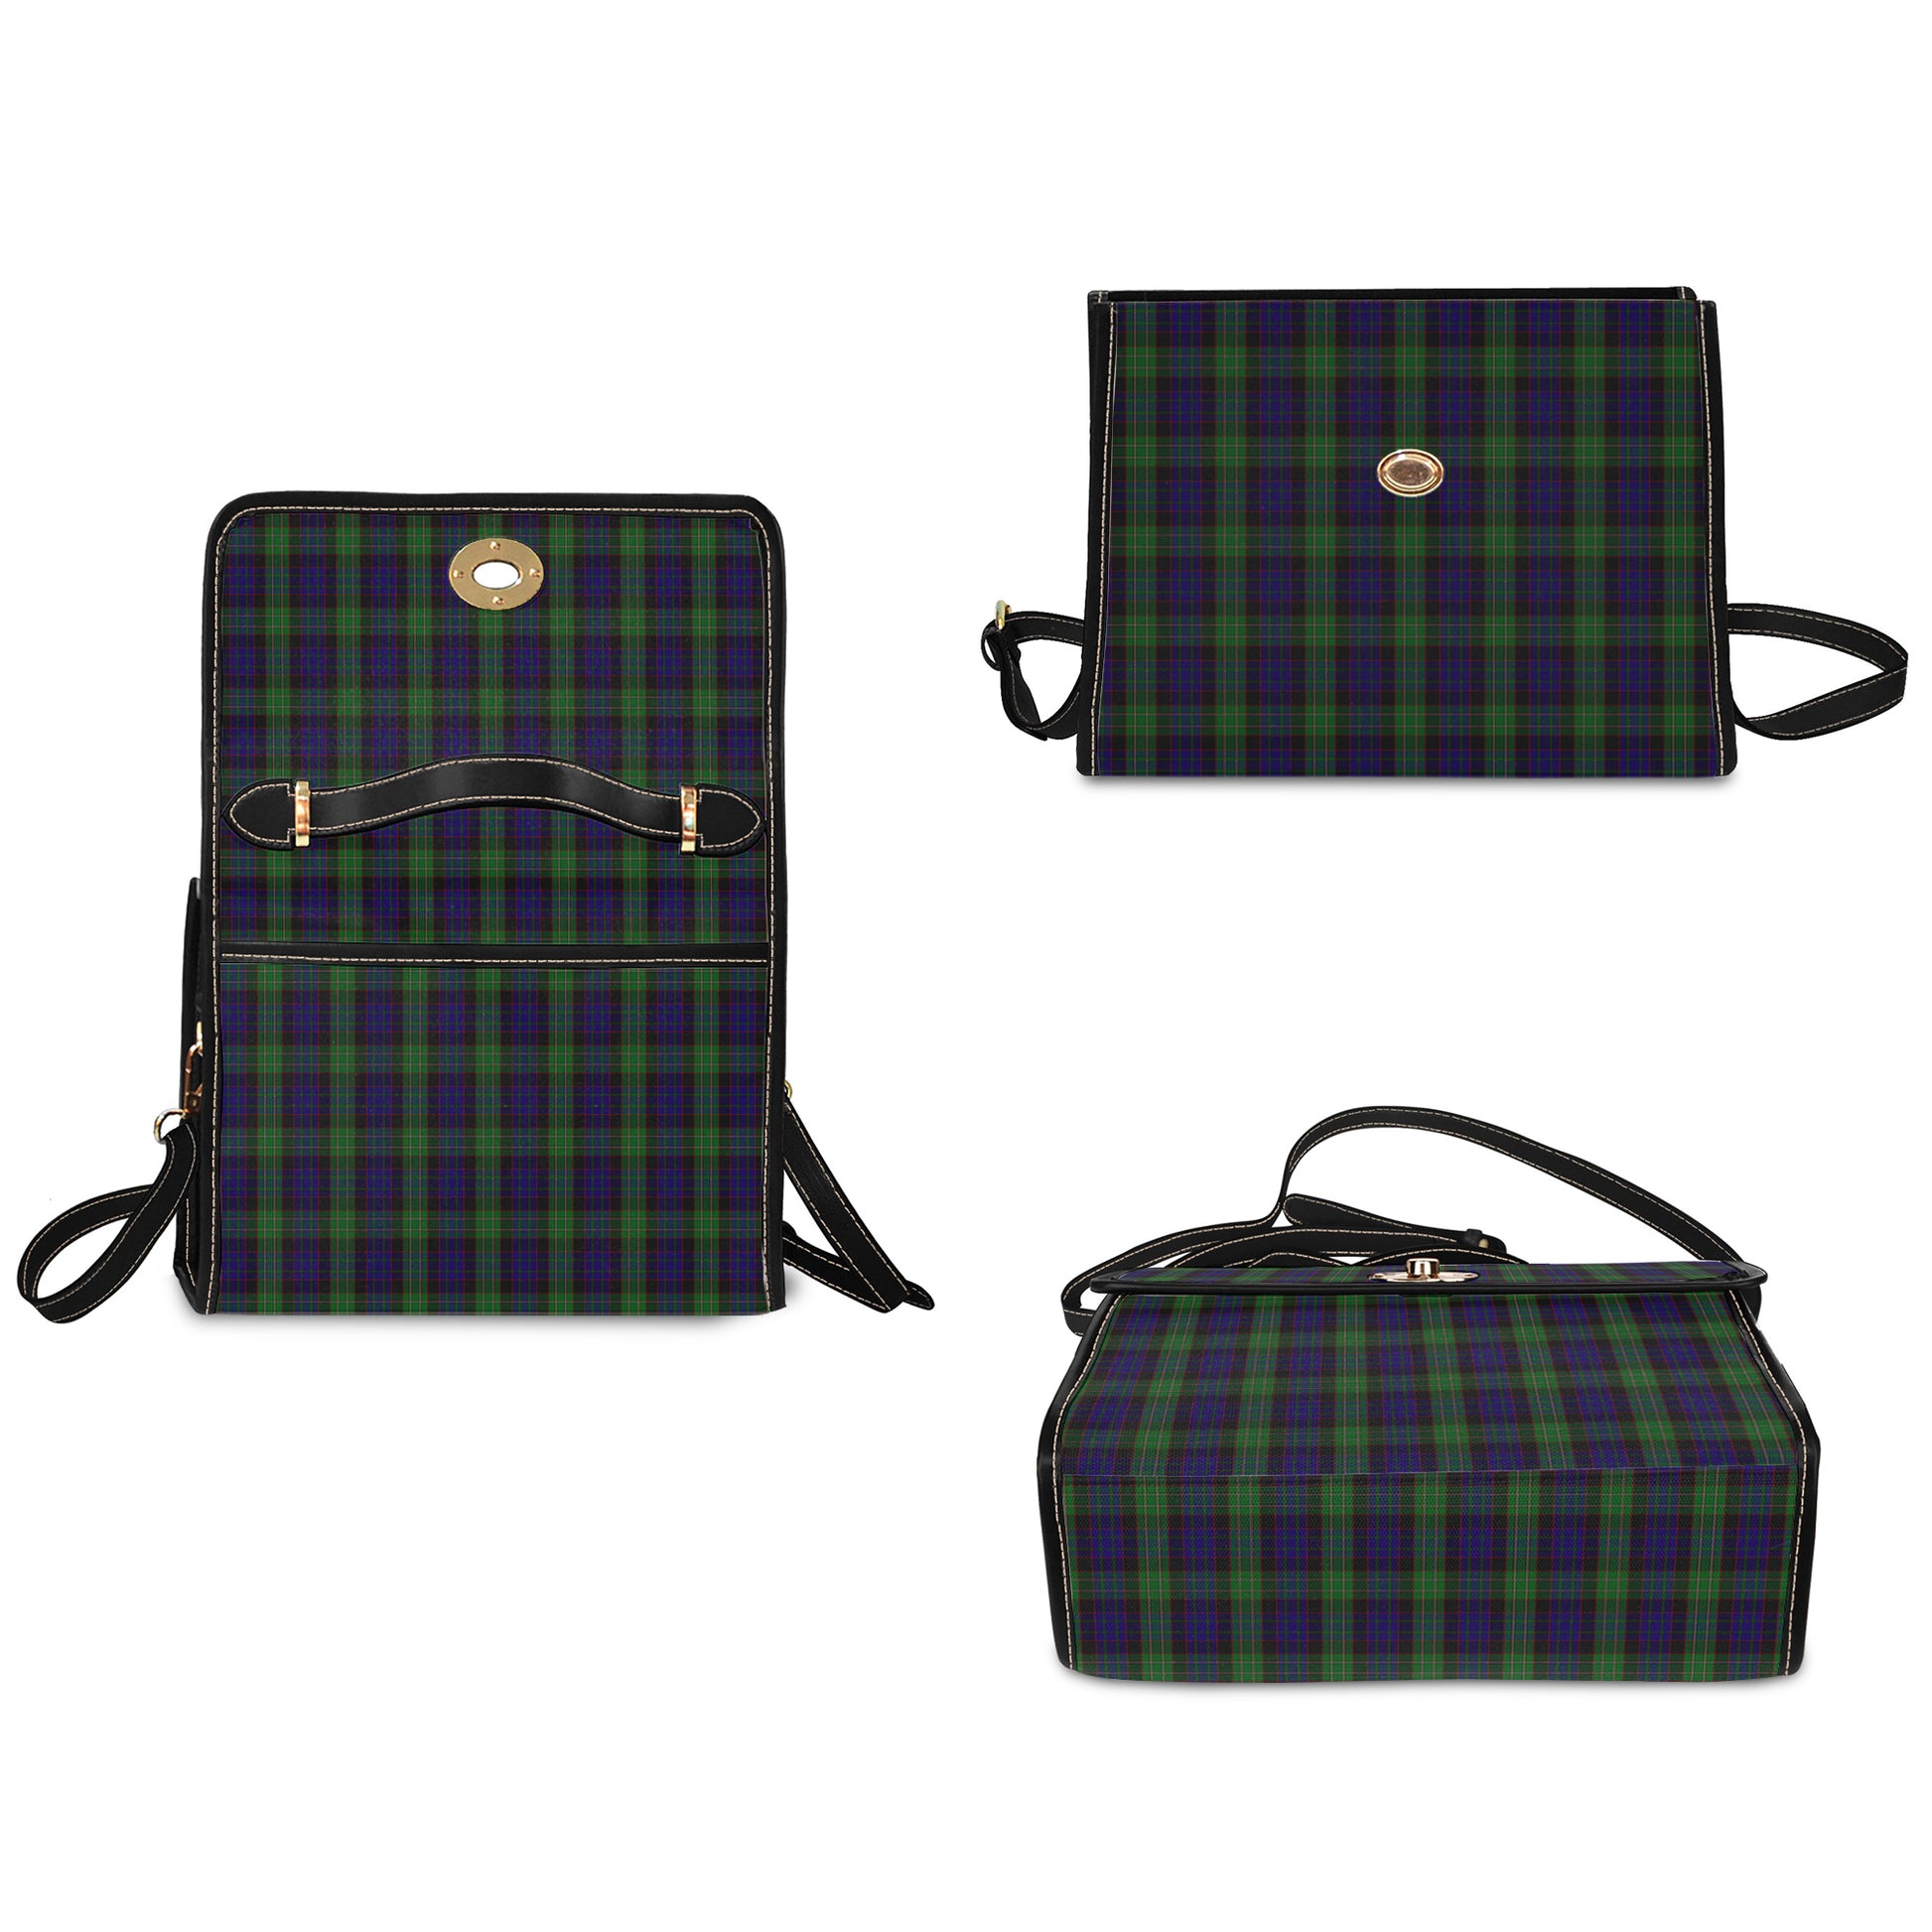 nicolson-green-hunting-tartan-leather-strap-waterproof-canvas-bag